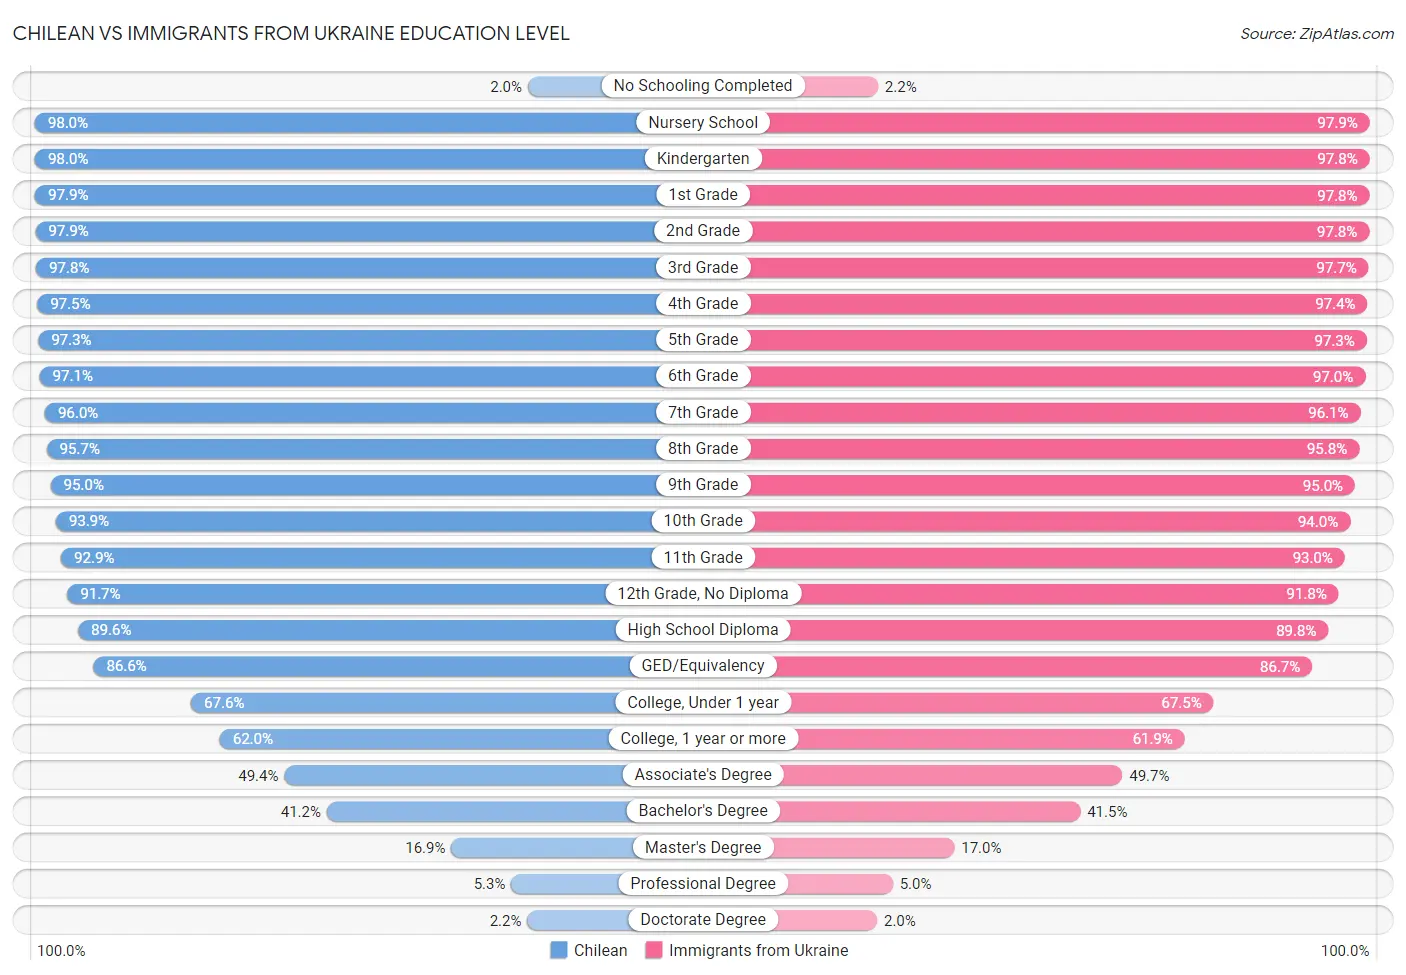 Chilean vs Immigrants from Ukraine Education Level